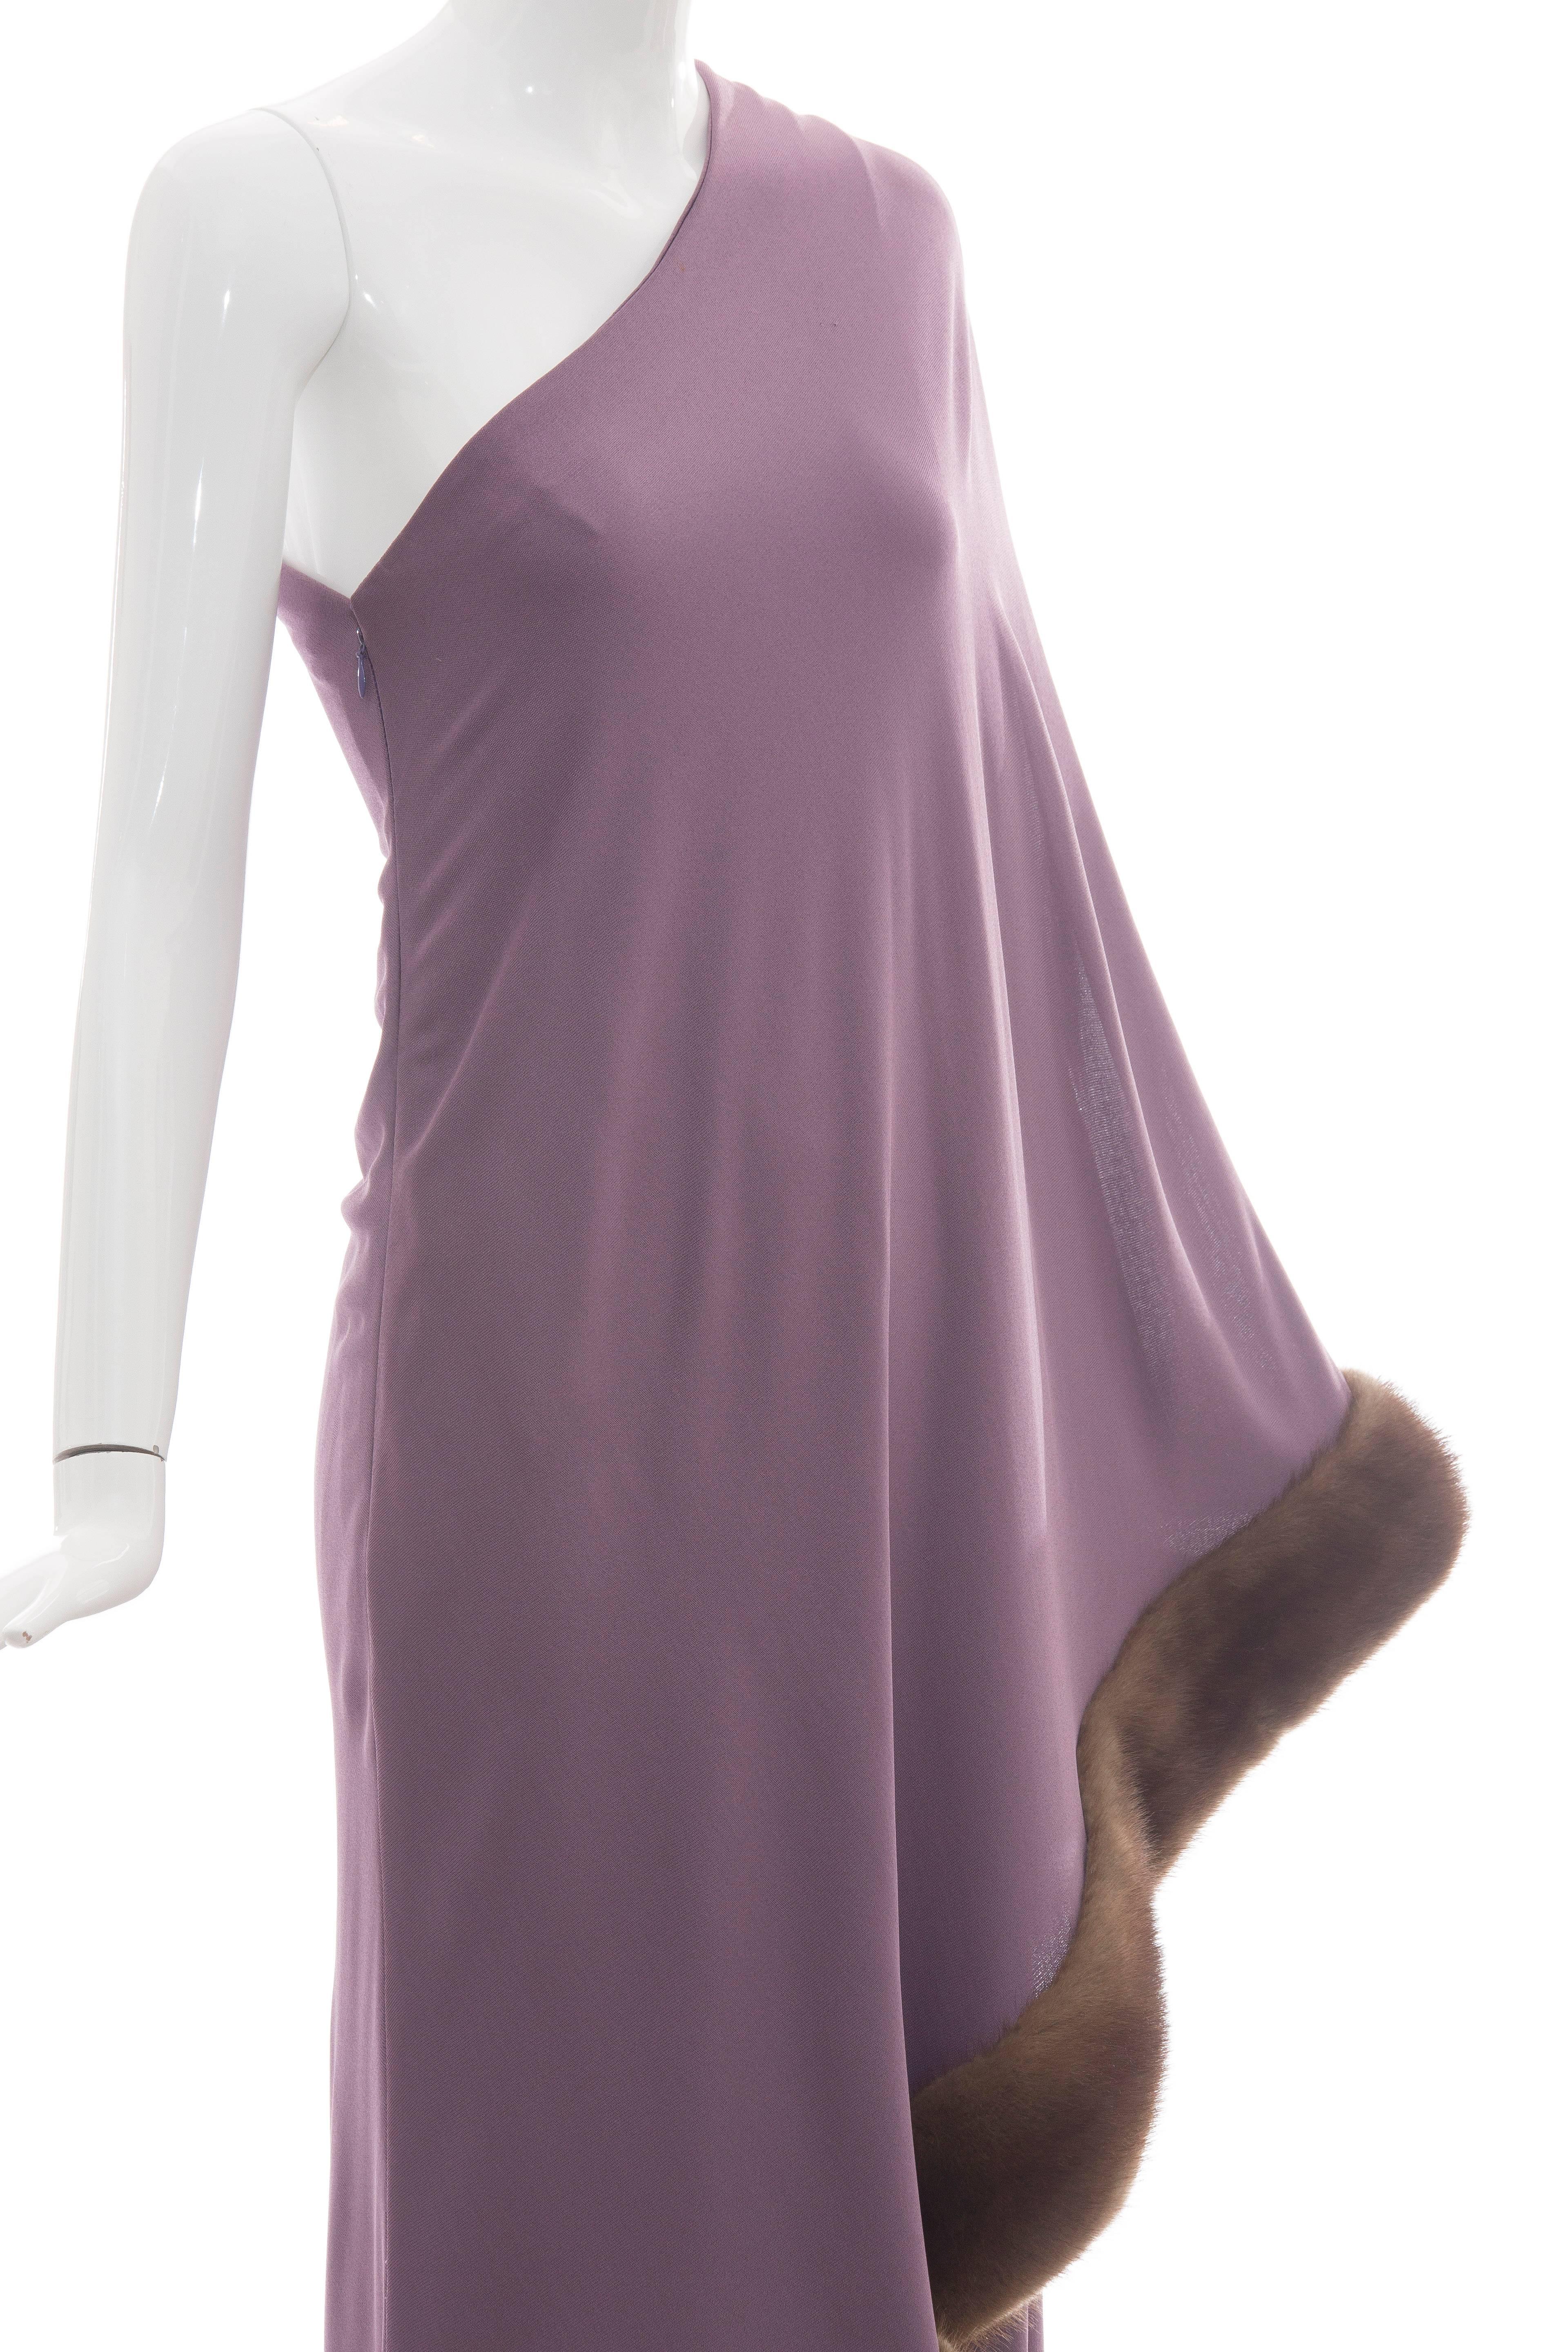 Bill Blass Violet Jersey One Shoulder Evening Dress With Mink Trim, Circa 1970's 4